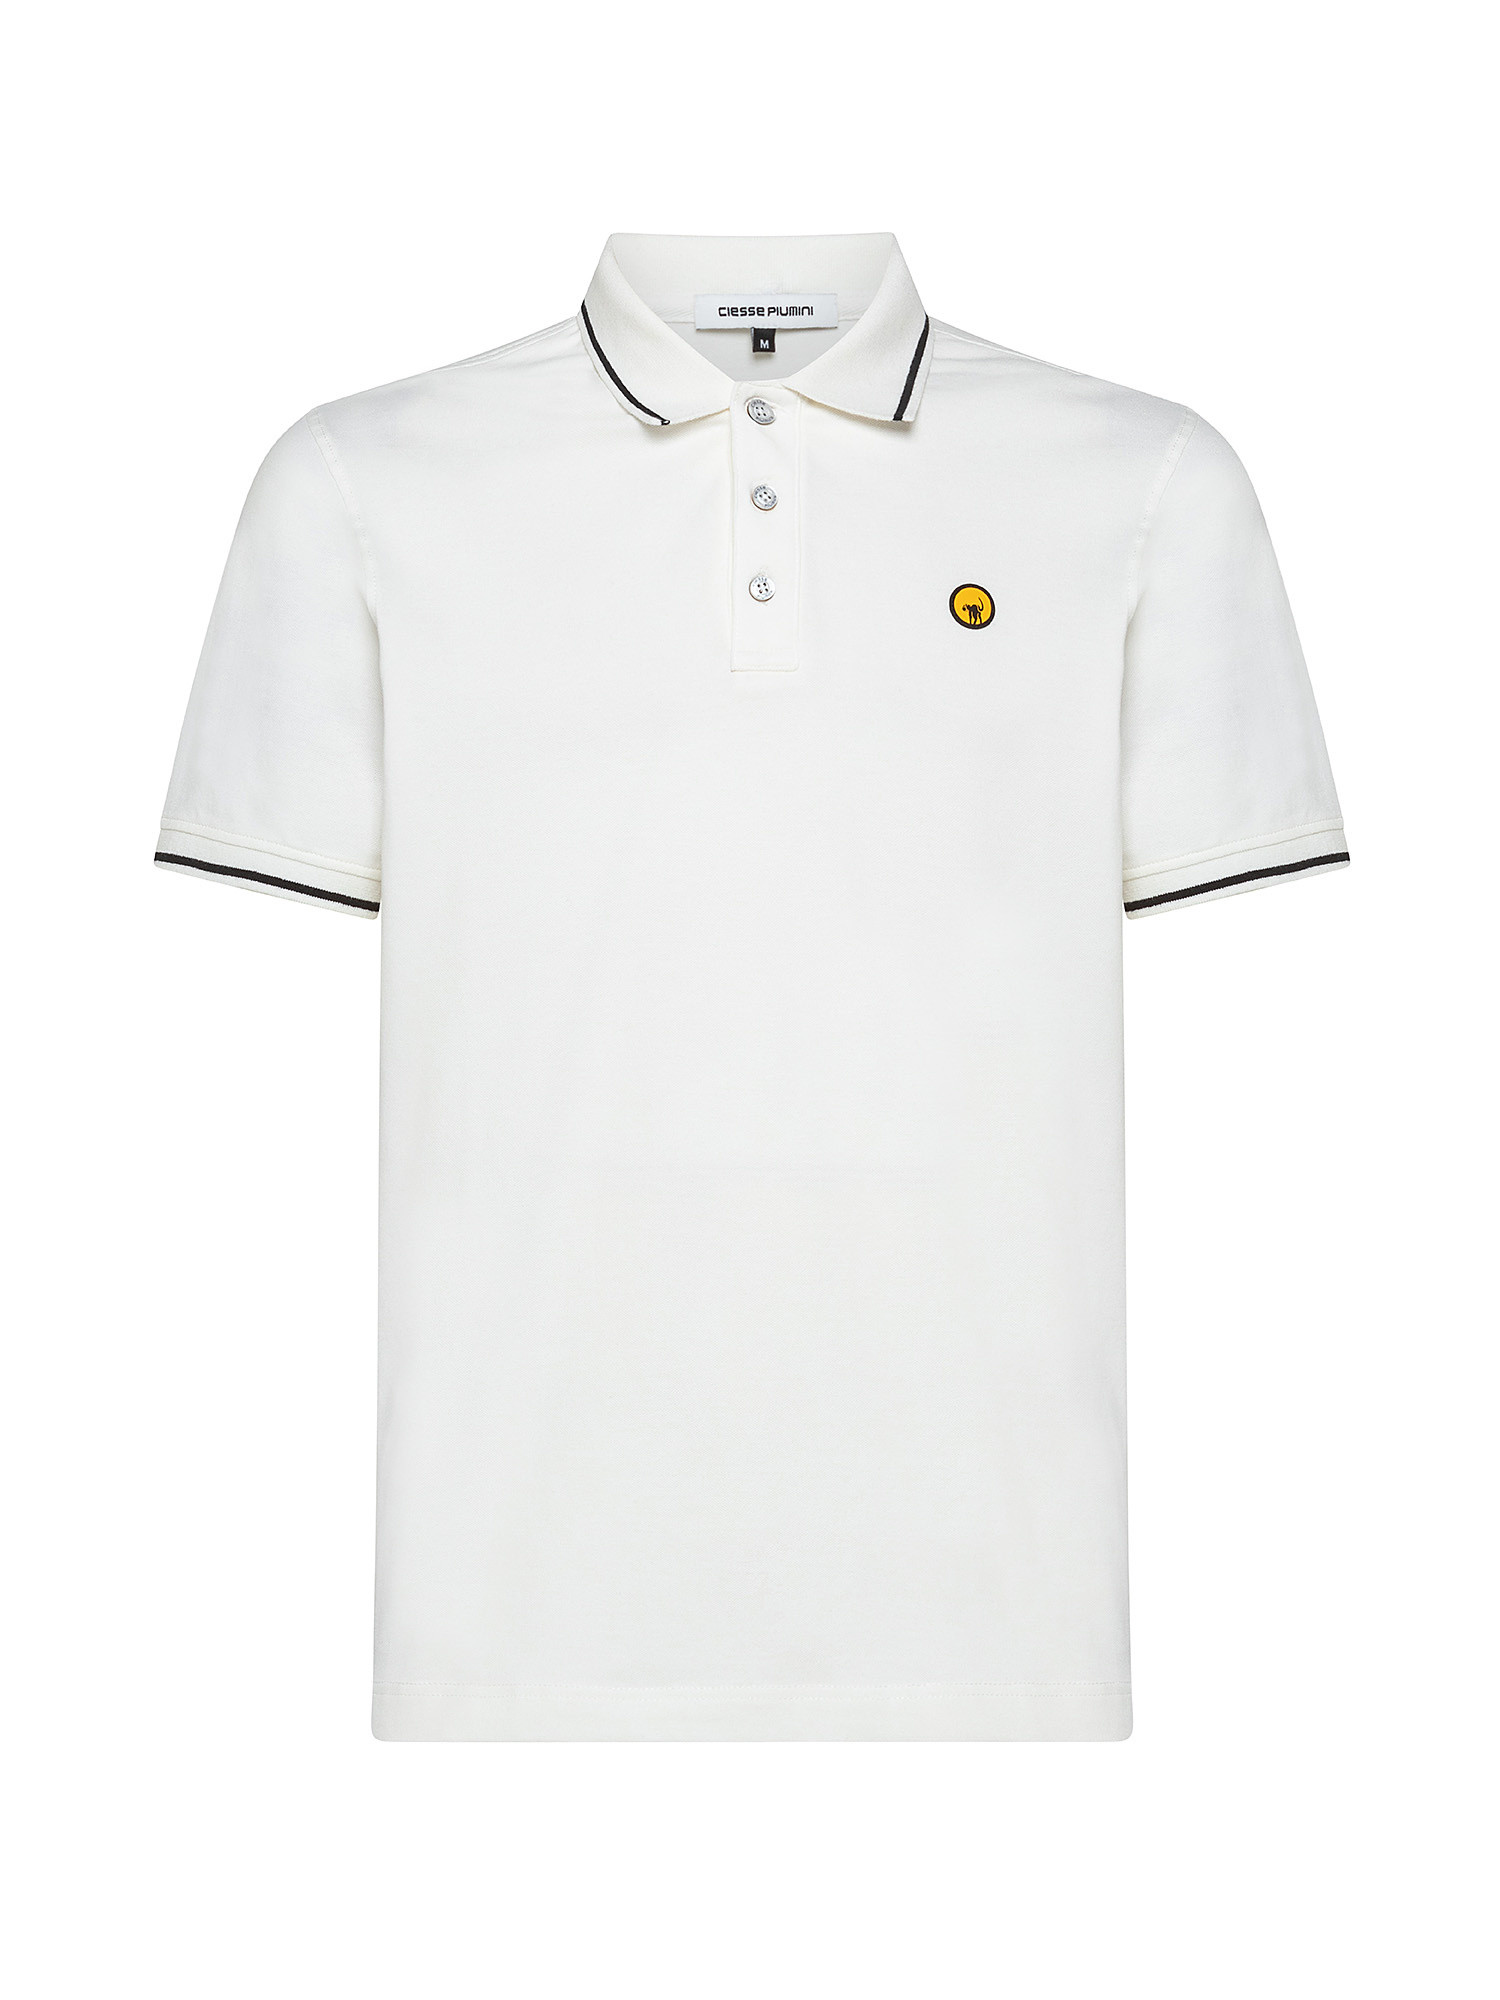 Polo shirt, White, large image number 0